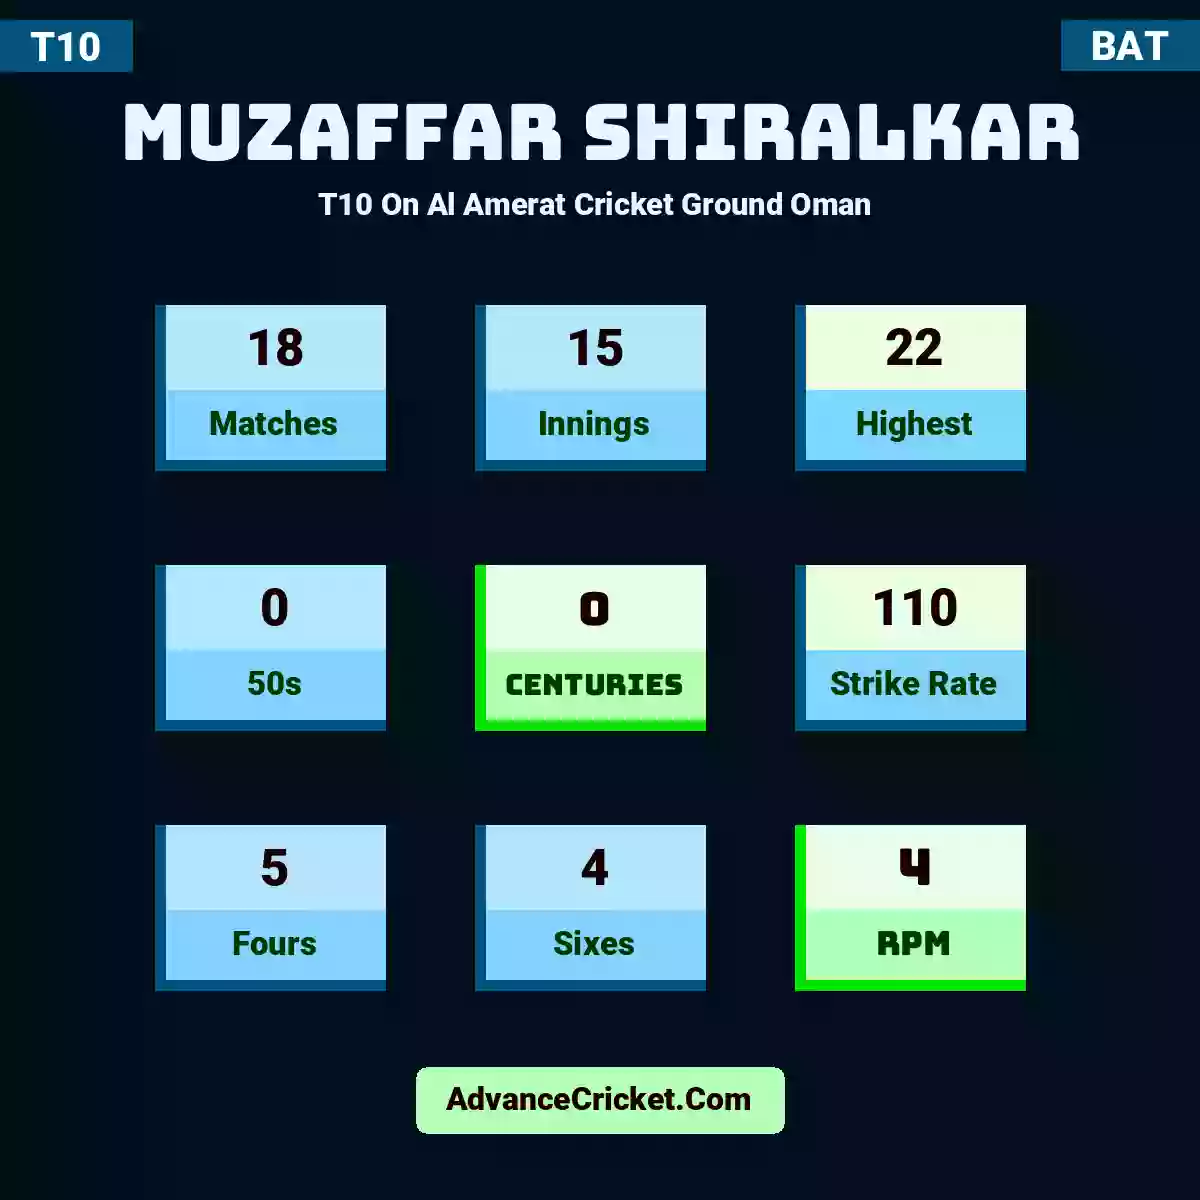 Muzaffar Shiralkar T10  On Al Amerat Cricket Ground Oman , Muzaffar Shiralkar played 18 matches, scored 22 runs as highest, 0 half-centuries, and 0 centuries, with a strike rate of 110. M.Shiralkar hit 5 fours and 4 sixes, with an RPM of 4.